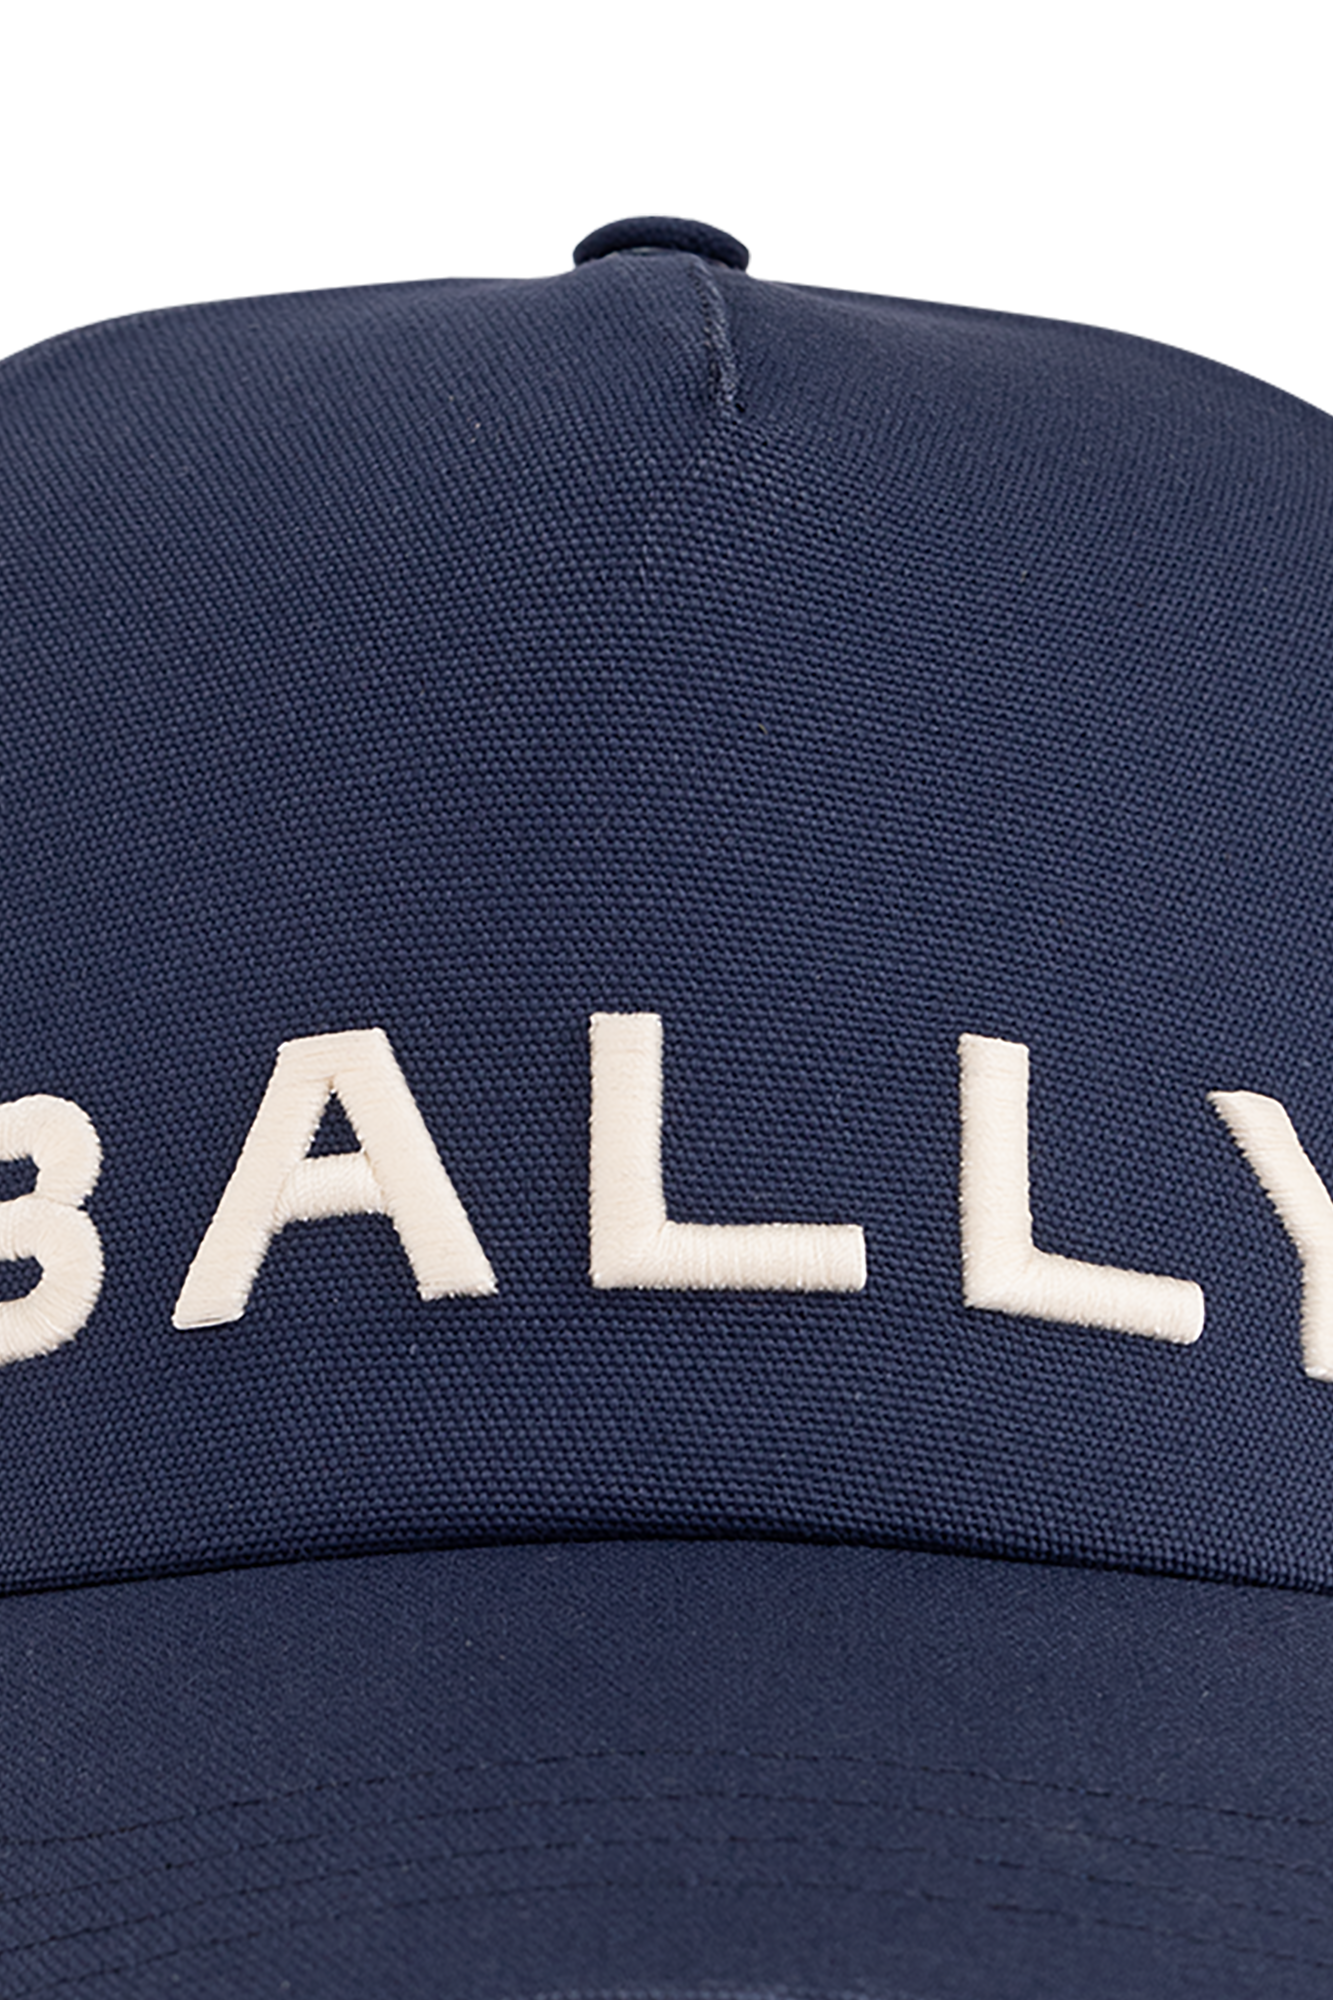 Bally Baseball cap